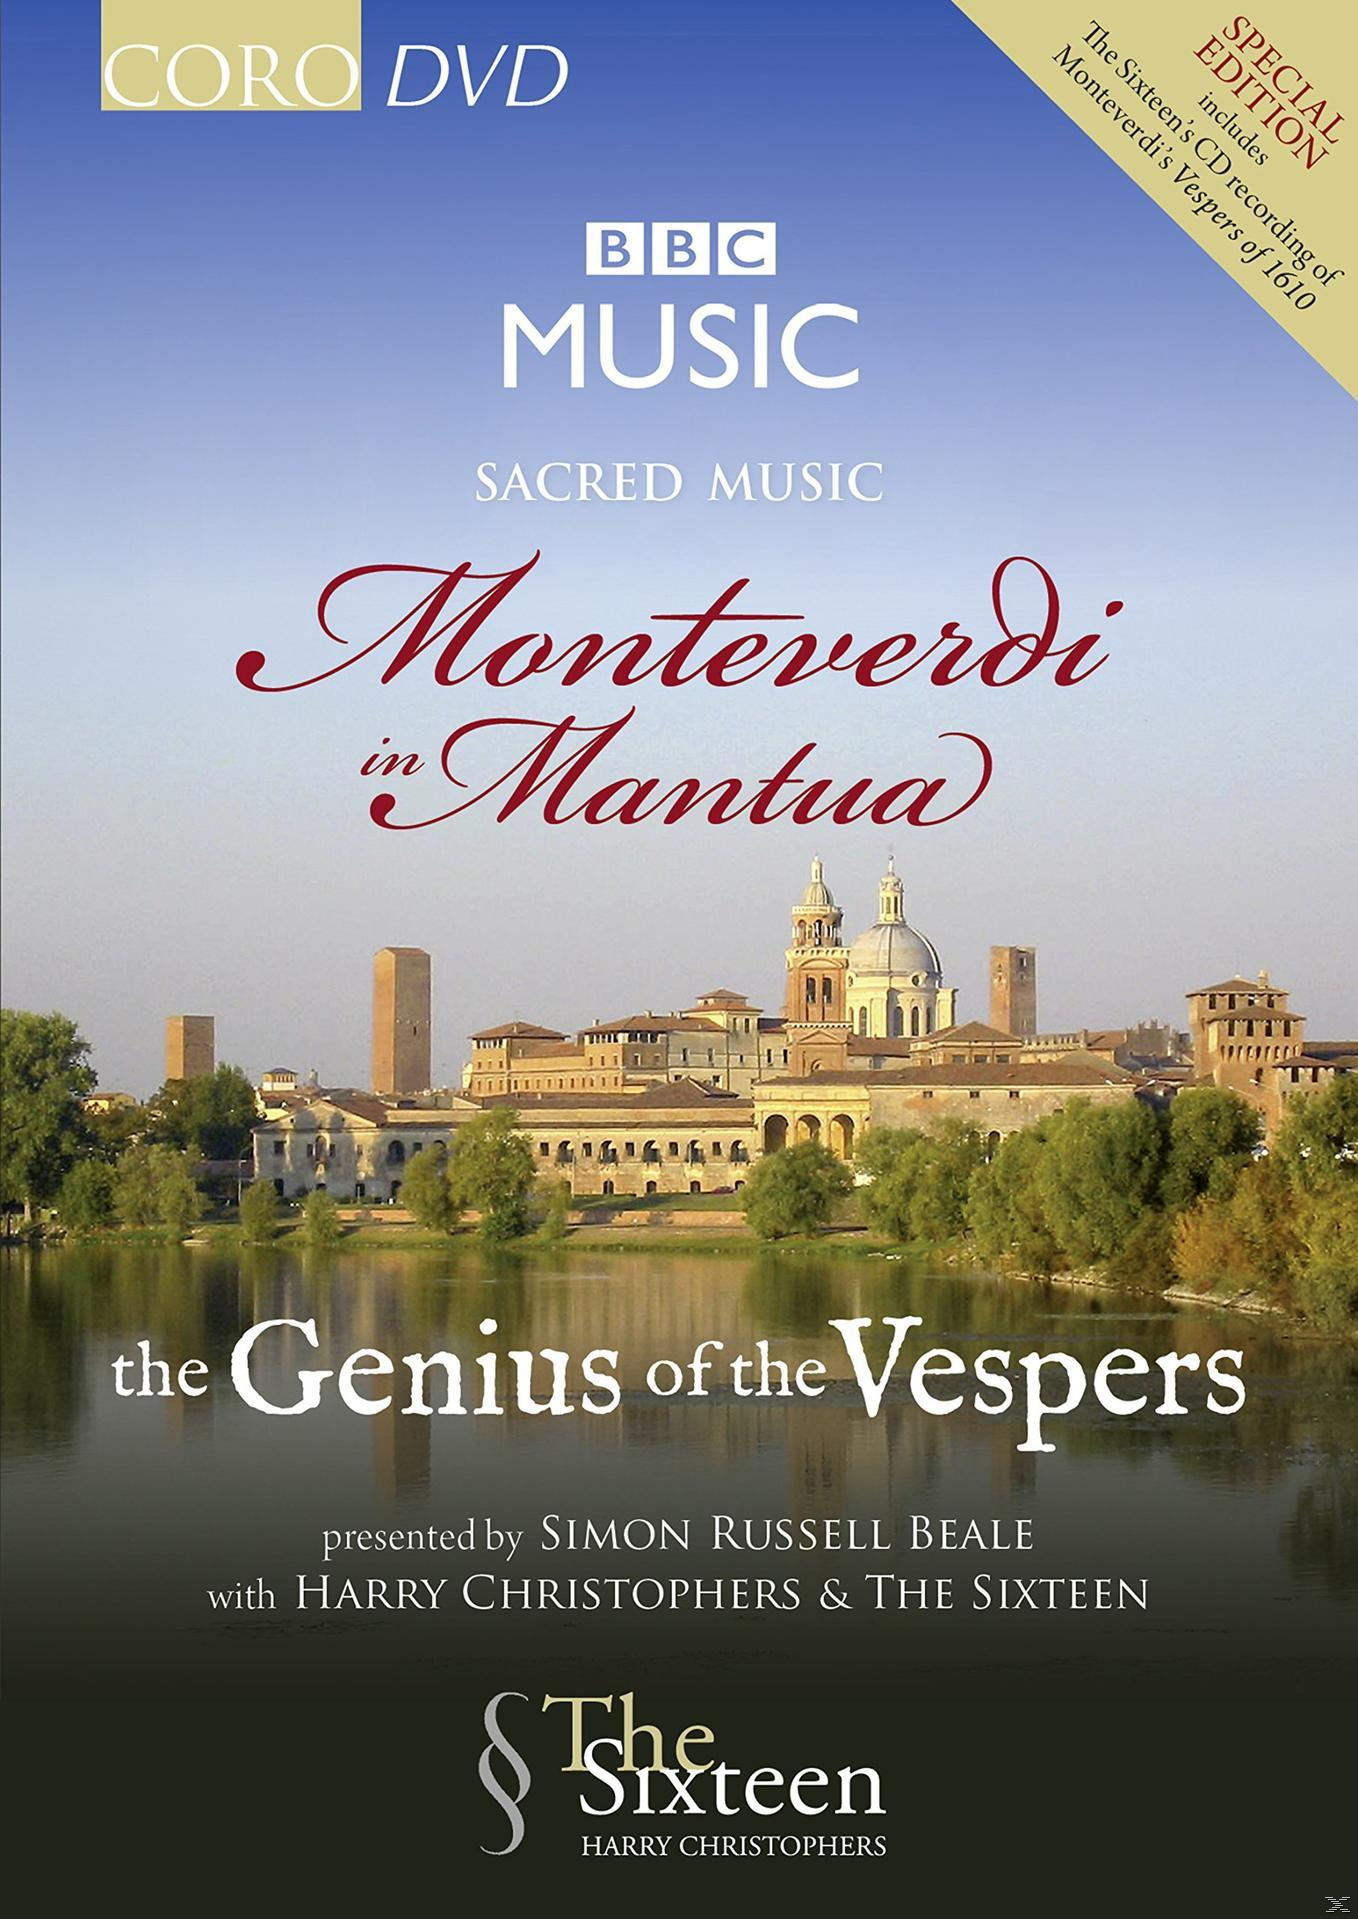 The Sixteen - Monteverdi In Cd-Version) CD) - (Dvd+2 + Mantua (DVD